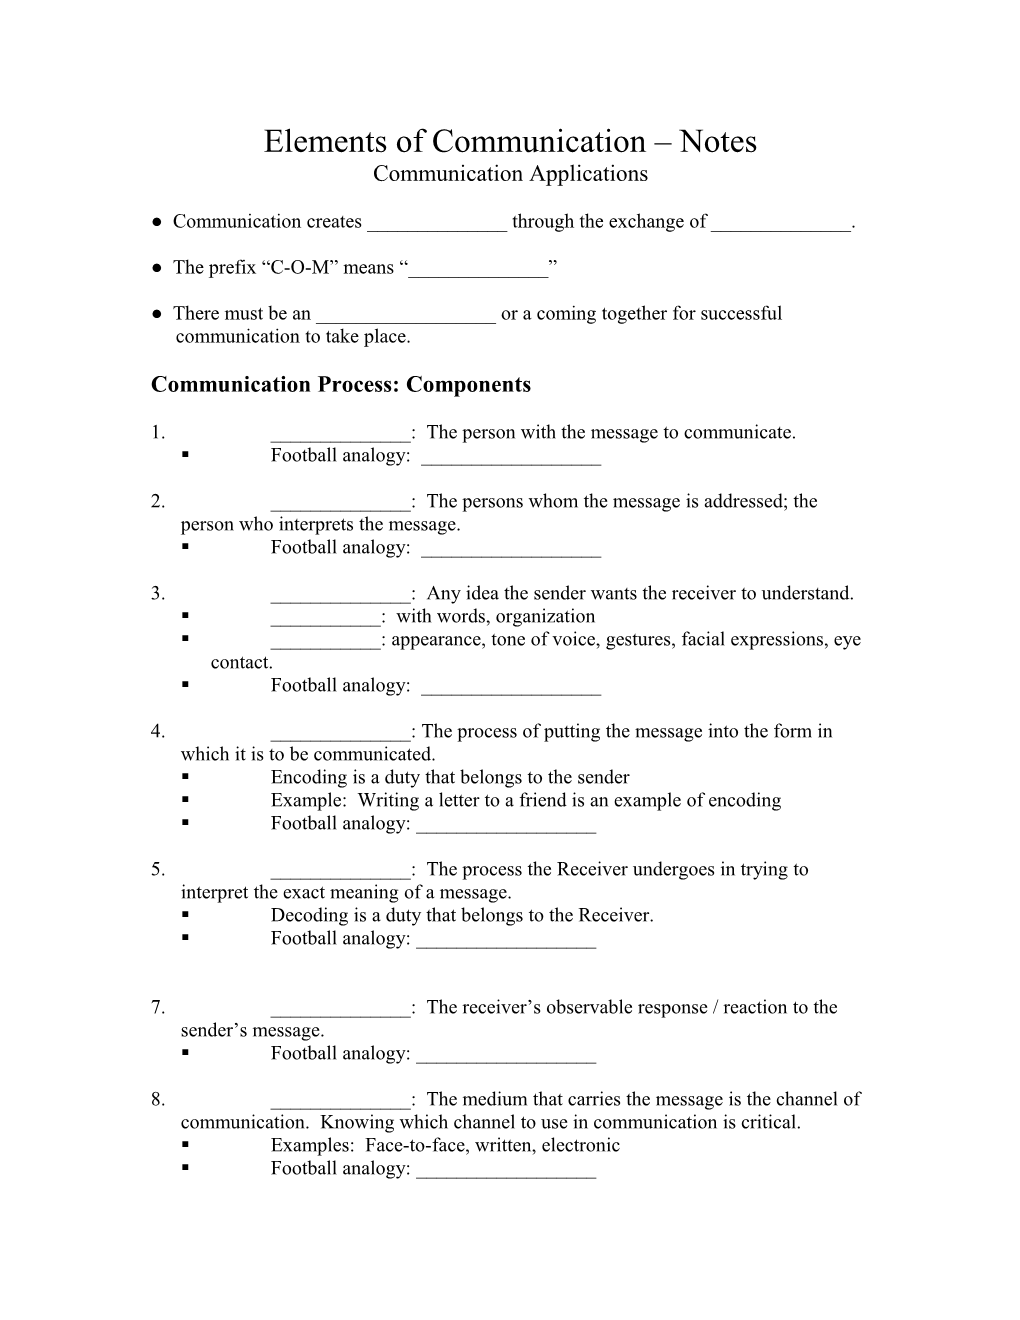 Elements of Communication Notes